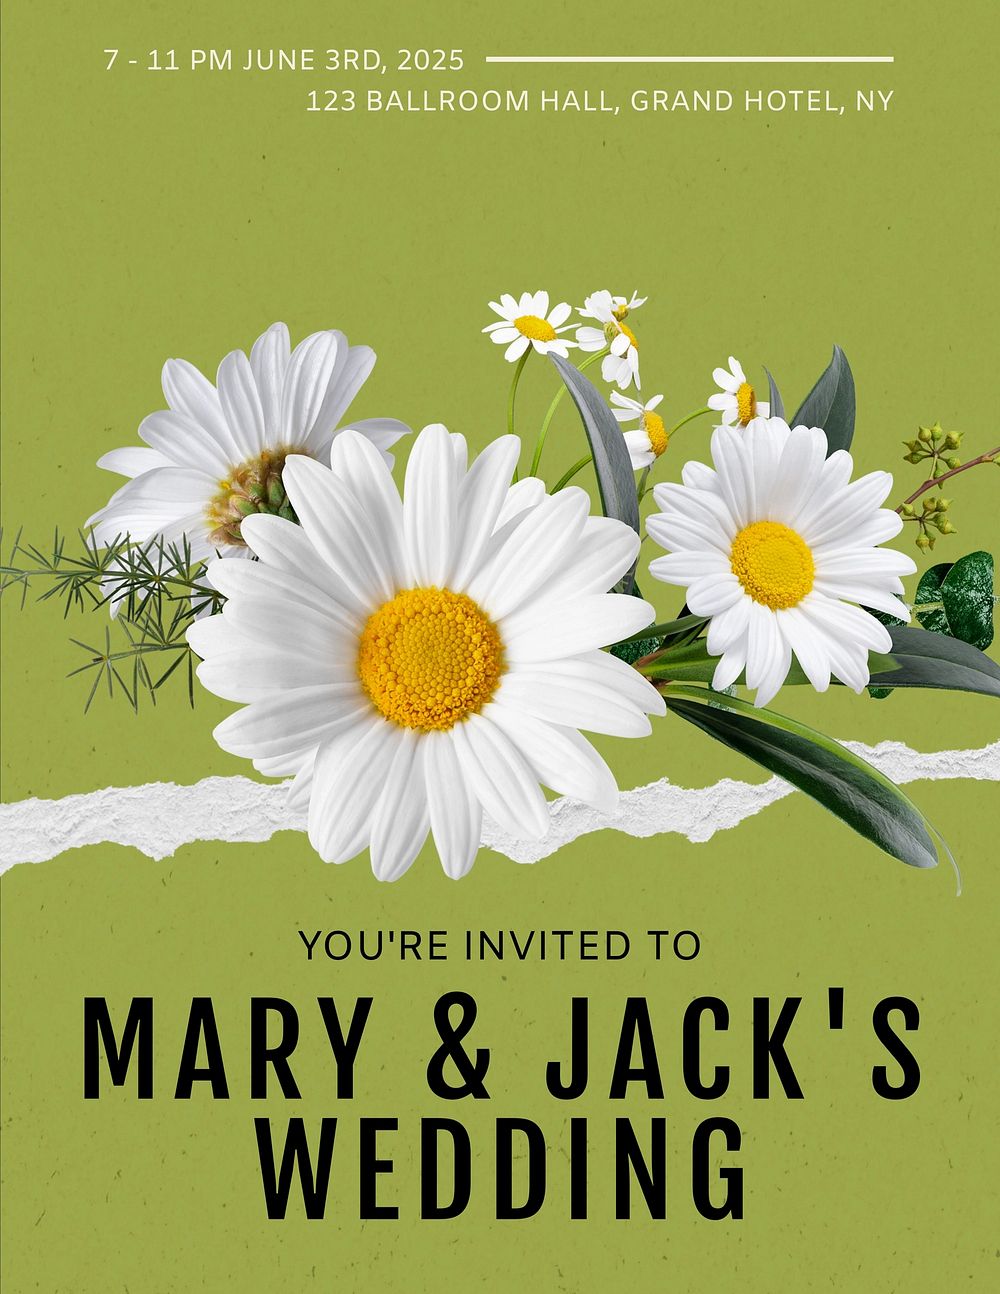 Wedding invitation flyer template advertisement